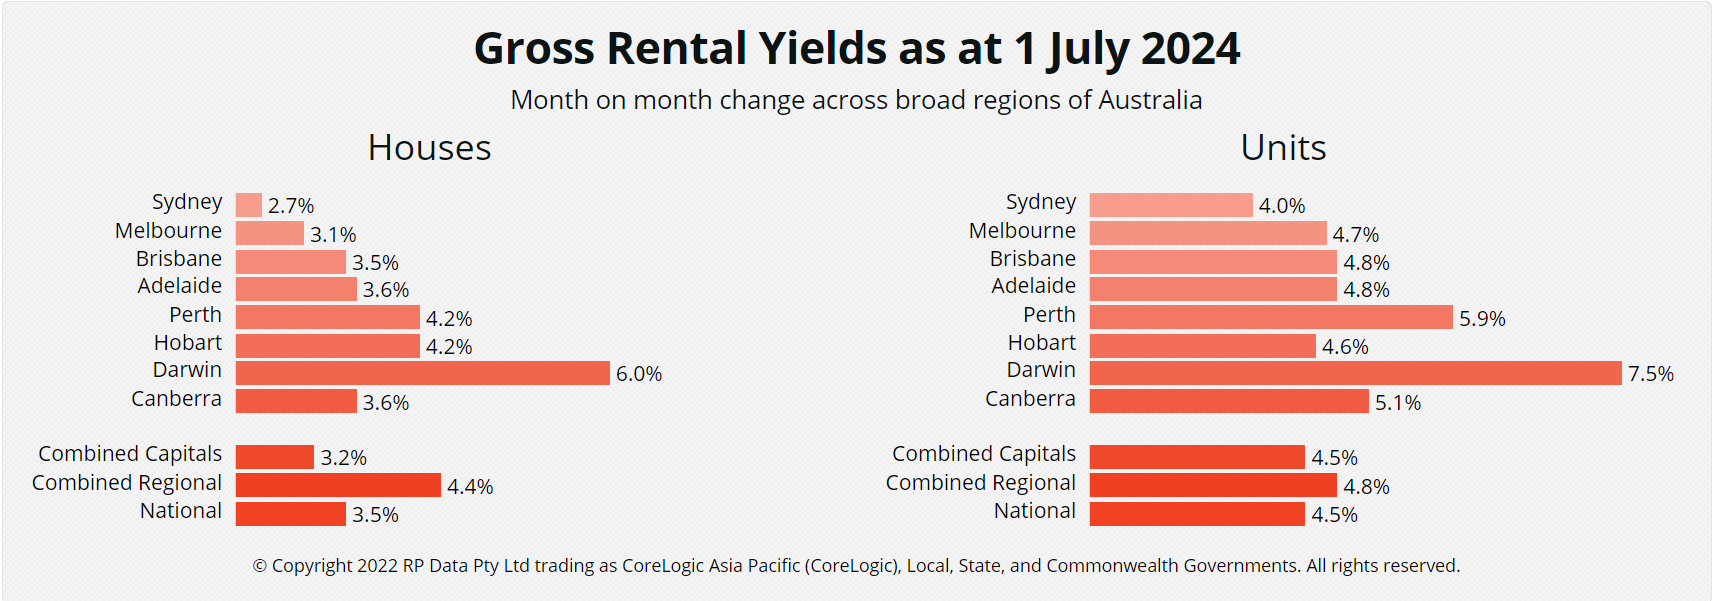 5-Gross Rental Yields - Australia